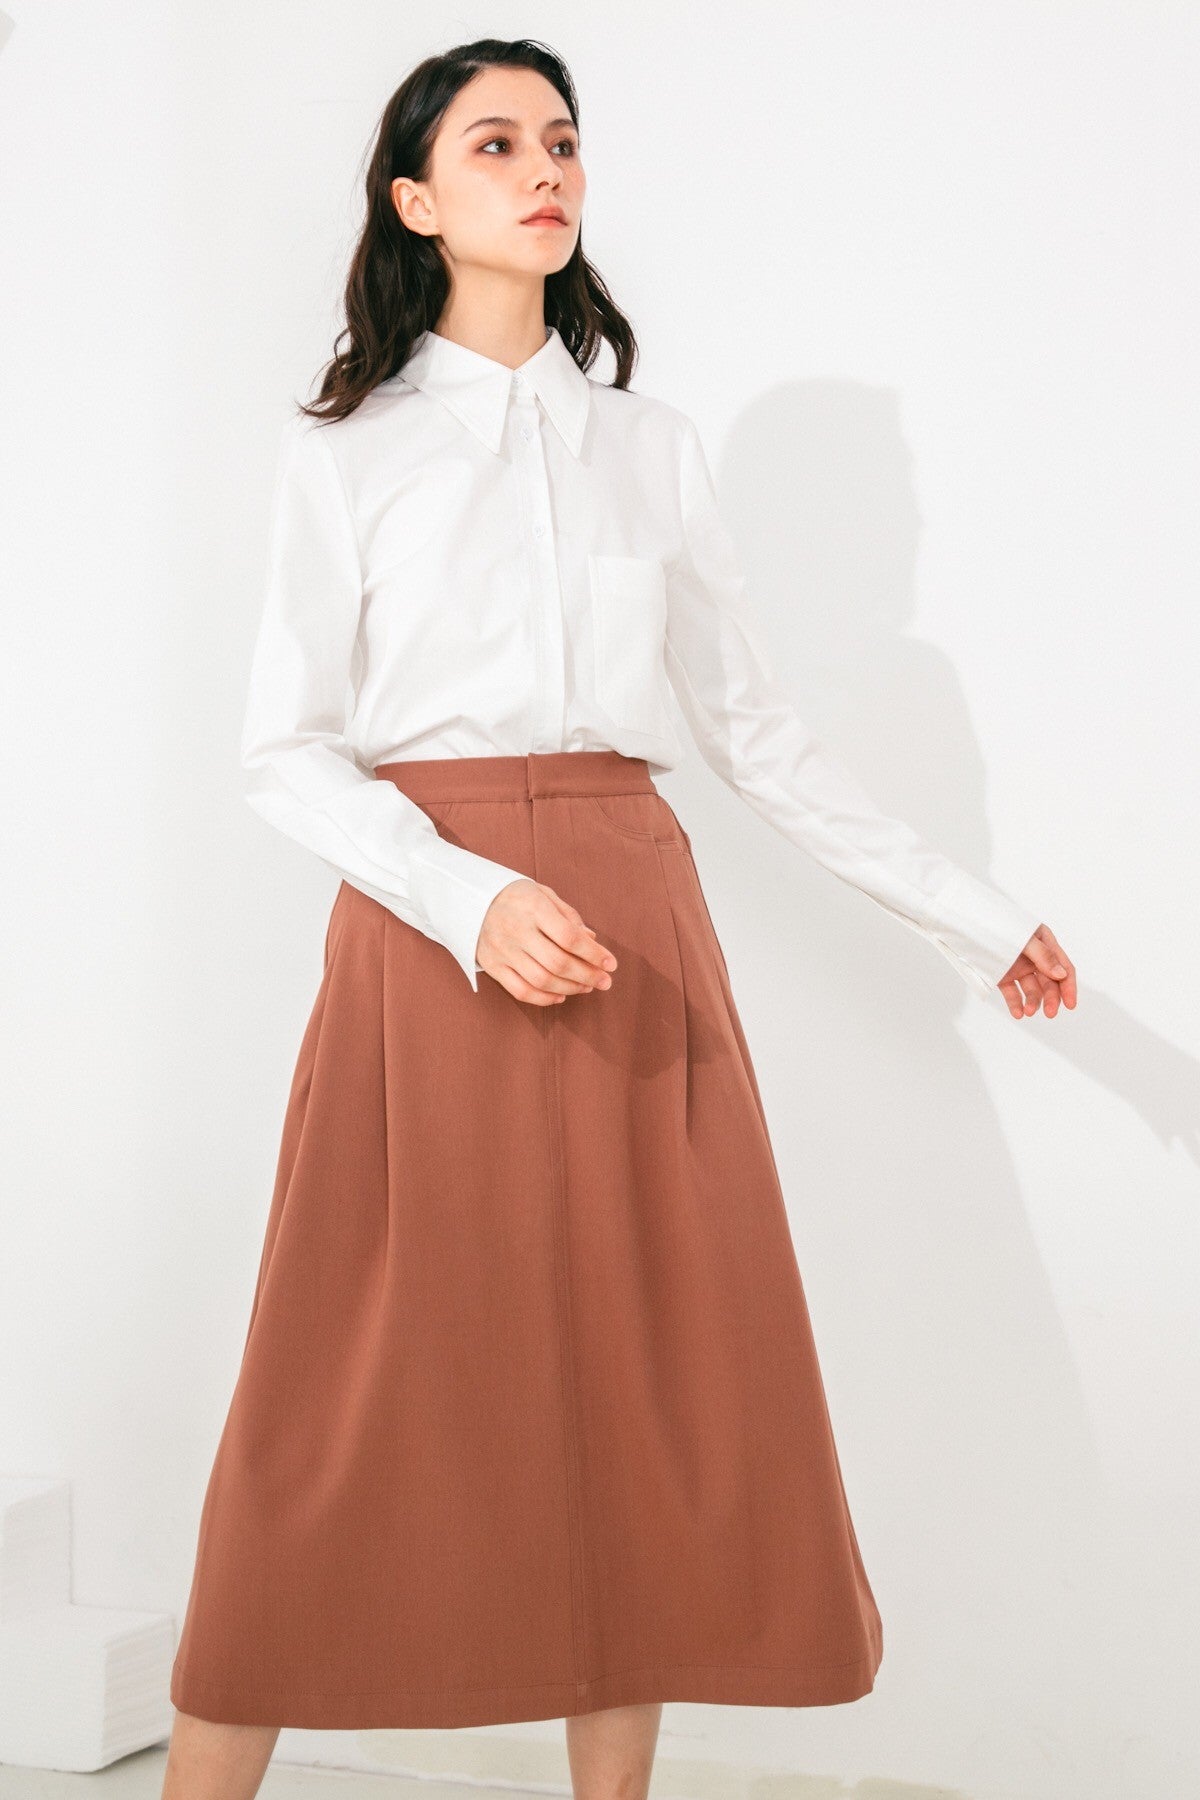 SKYE San Francisco SF shop ethical sustainable modern minimalist elegant quality women clothing fashion brand Aurelie Midi Skirt Light Brown 3